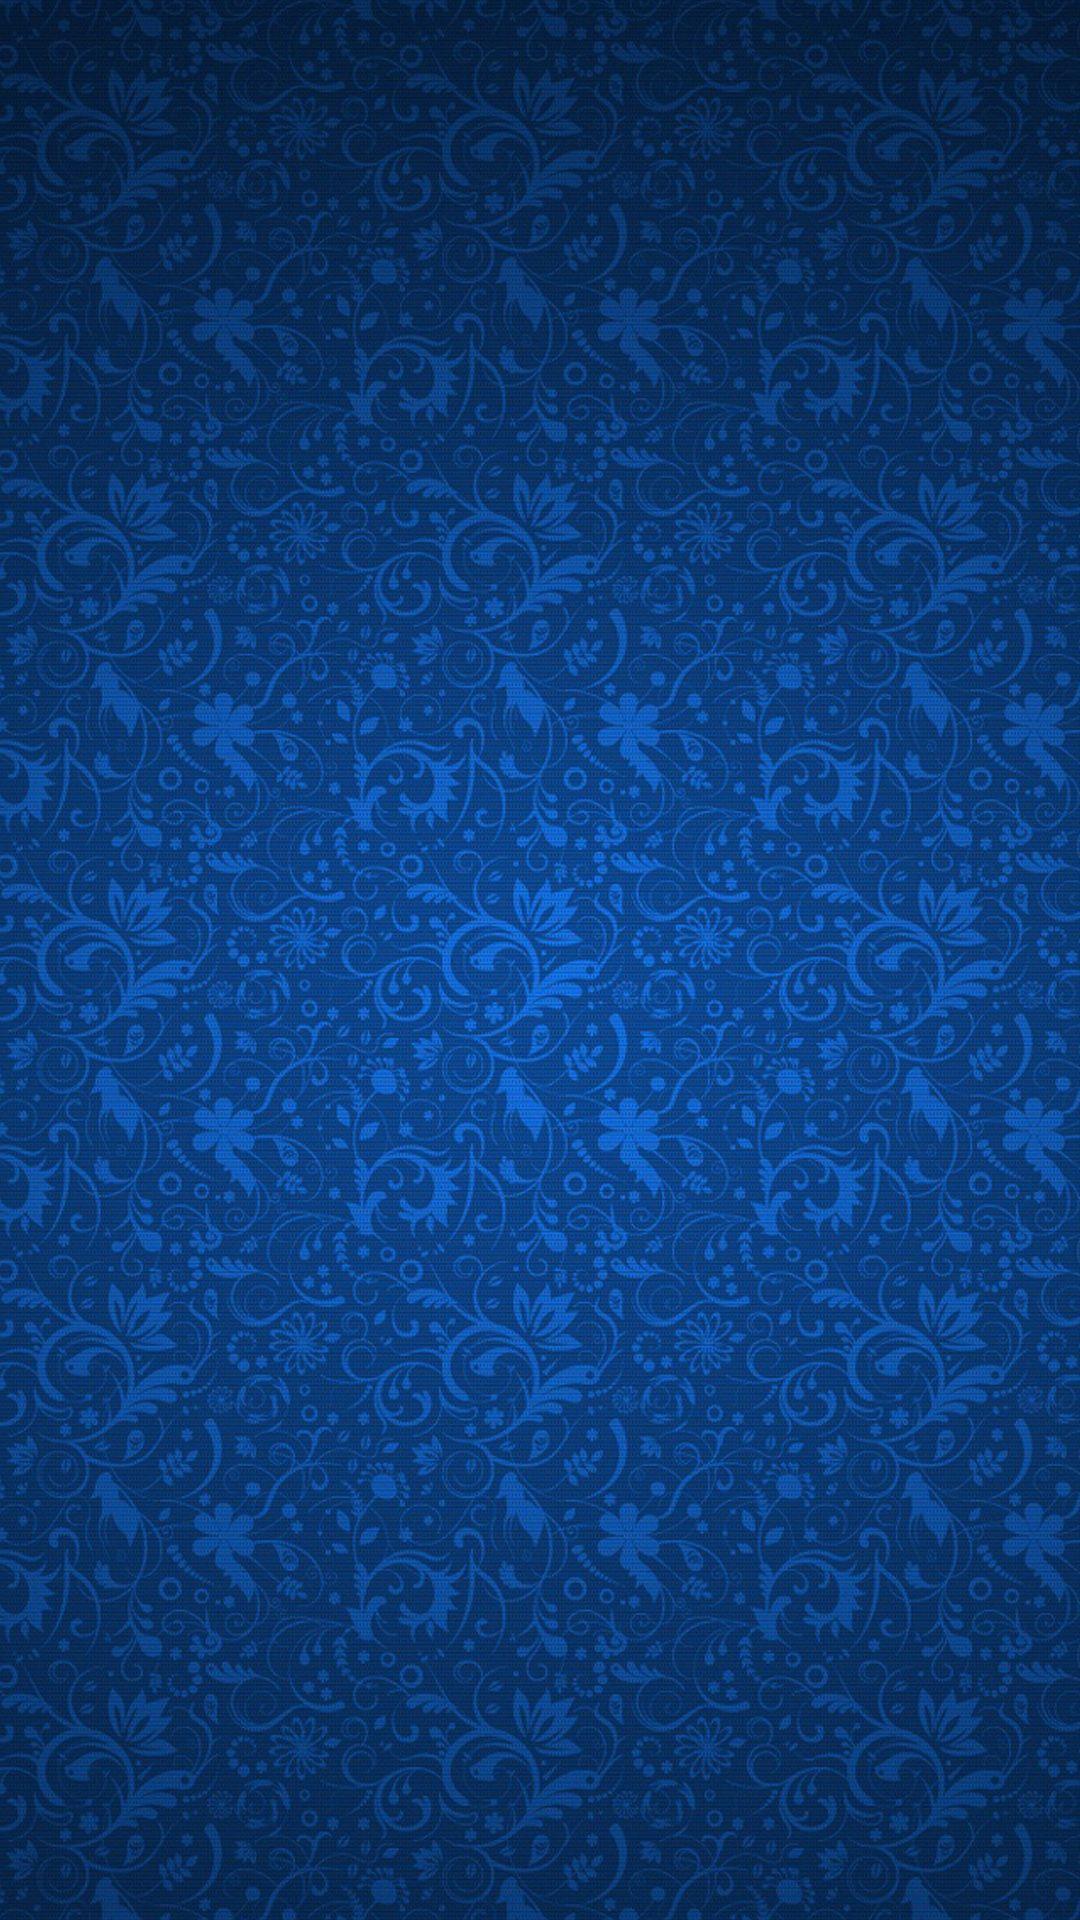 Blue dreams S4 Wallpaper, Samsung Galaxy S4 Wallpaper